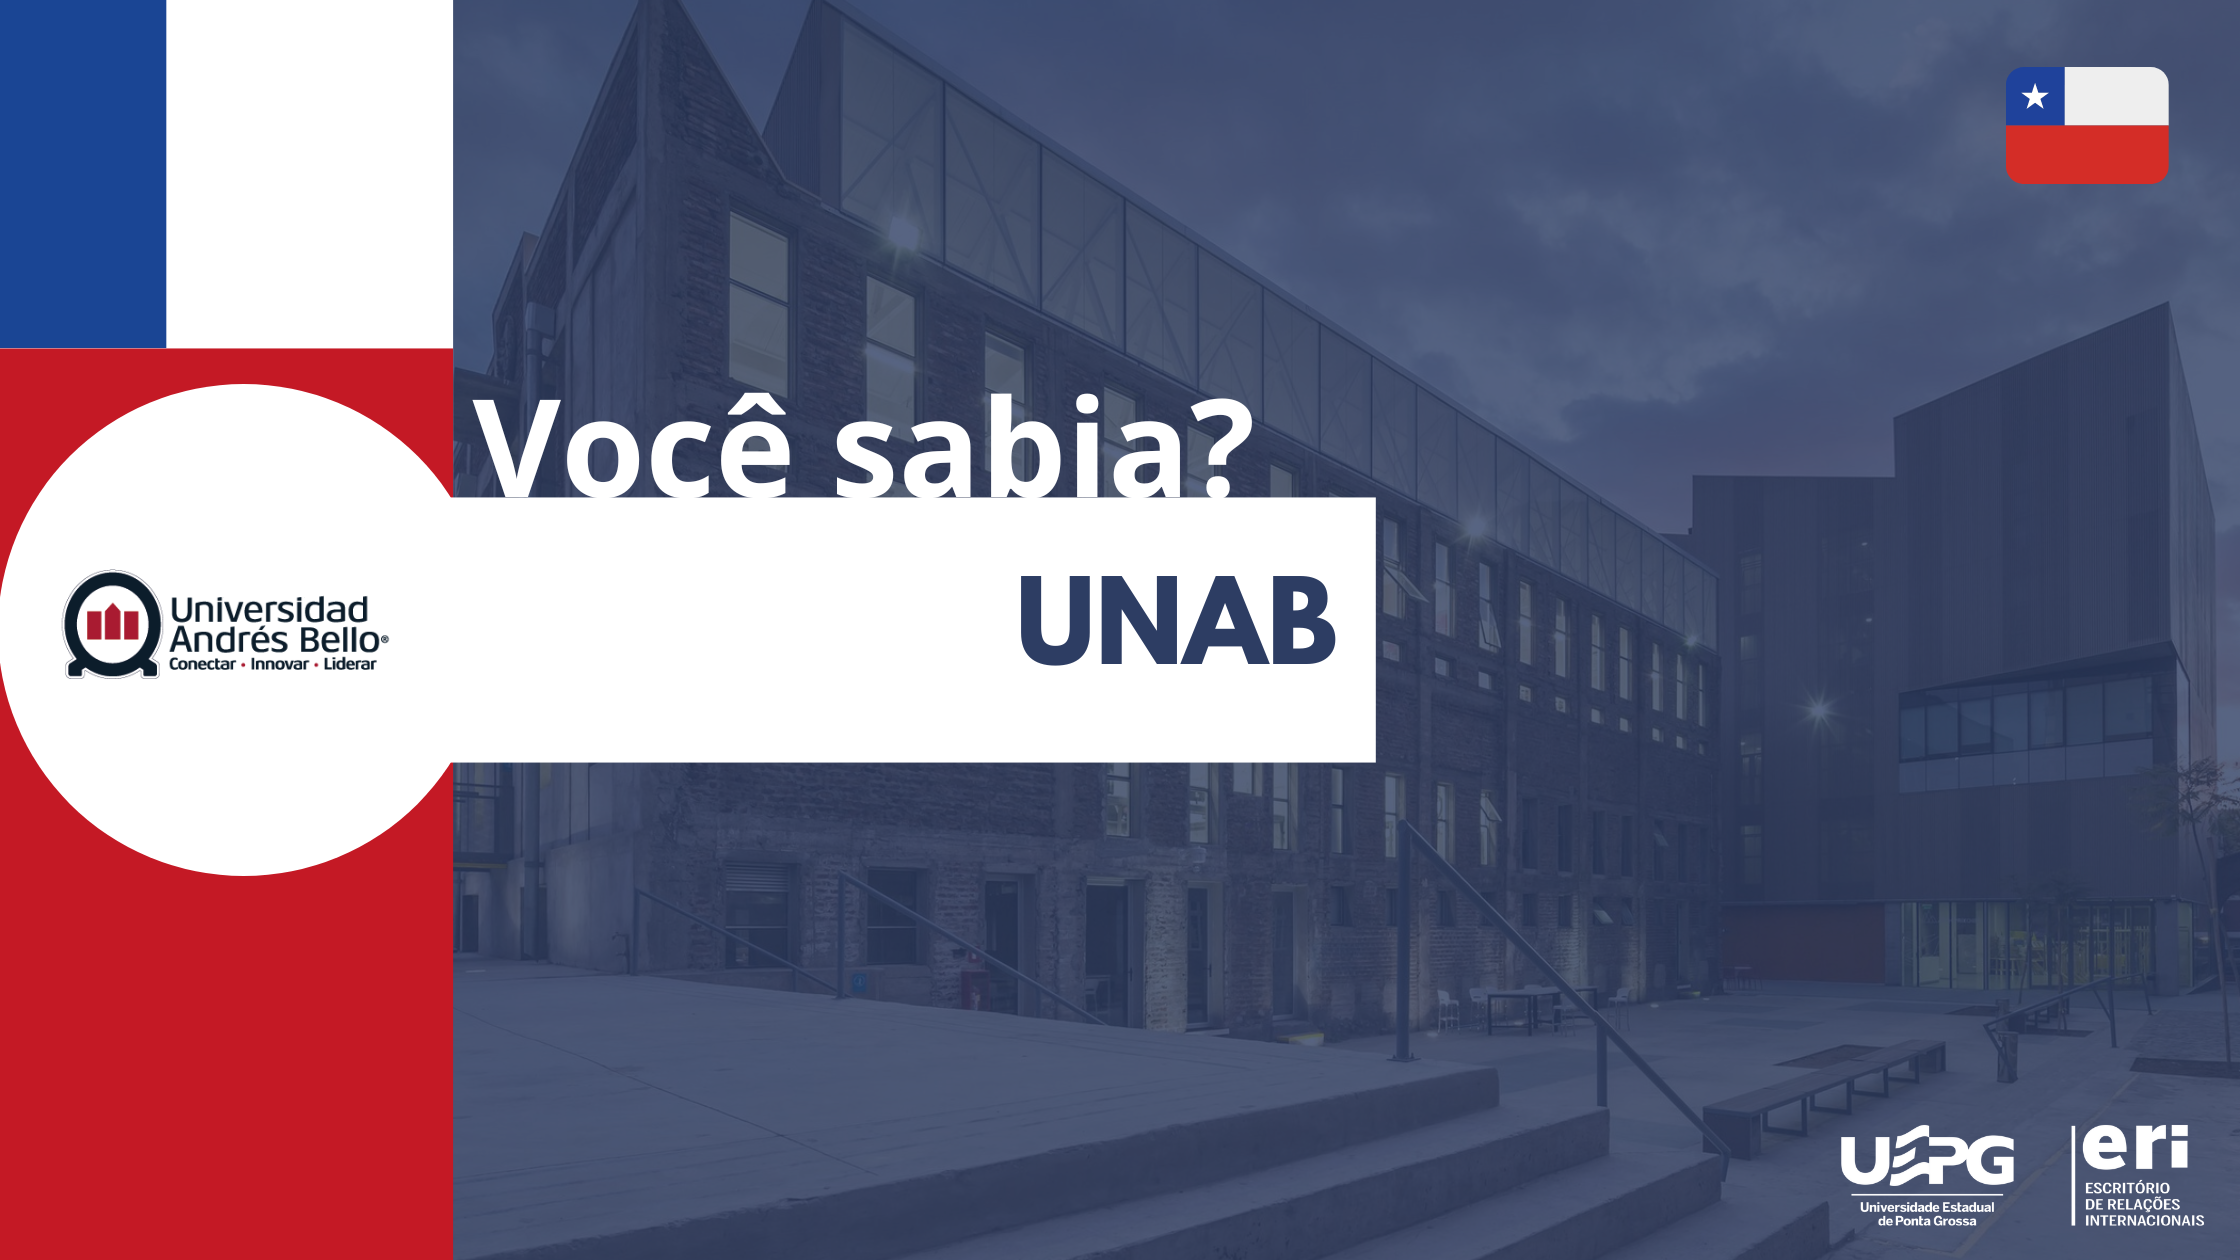 Did You Know? UNAB